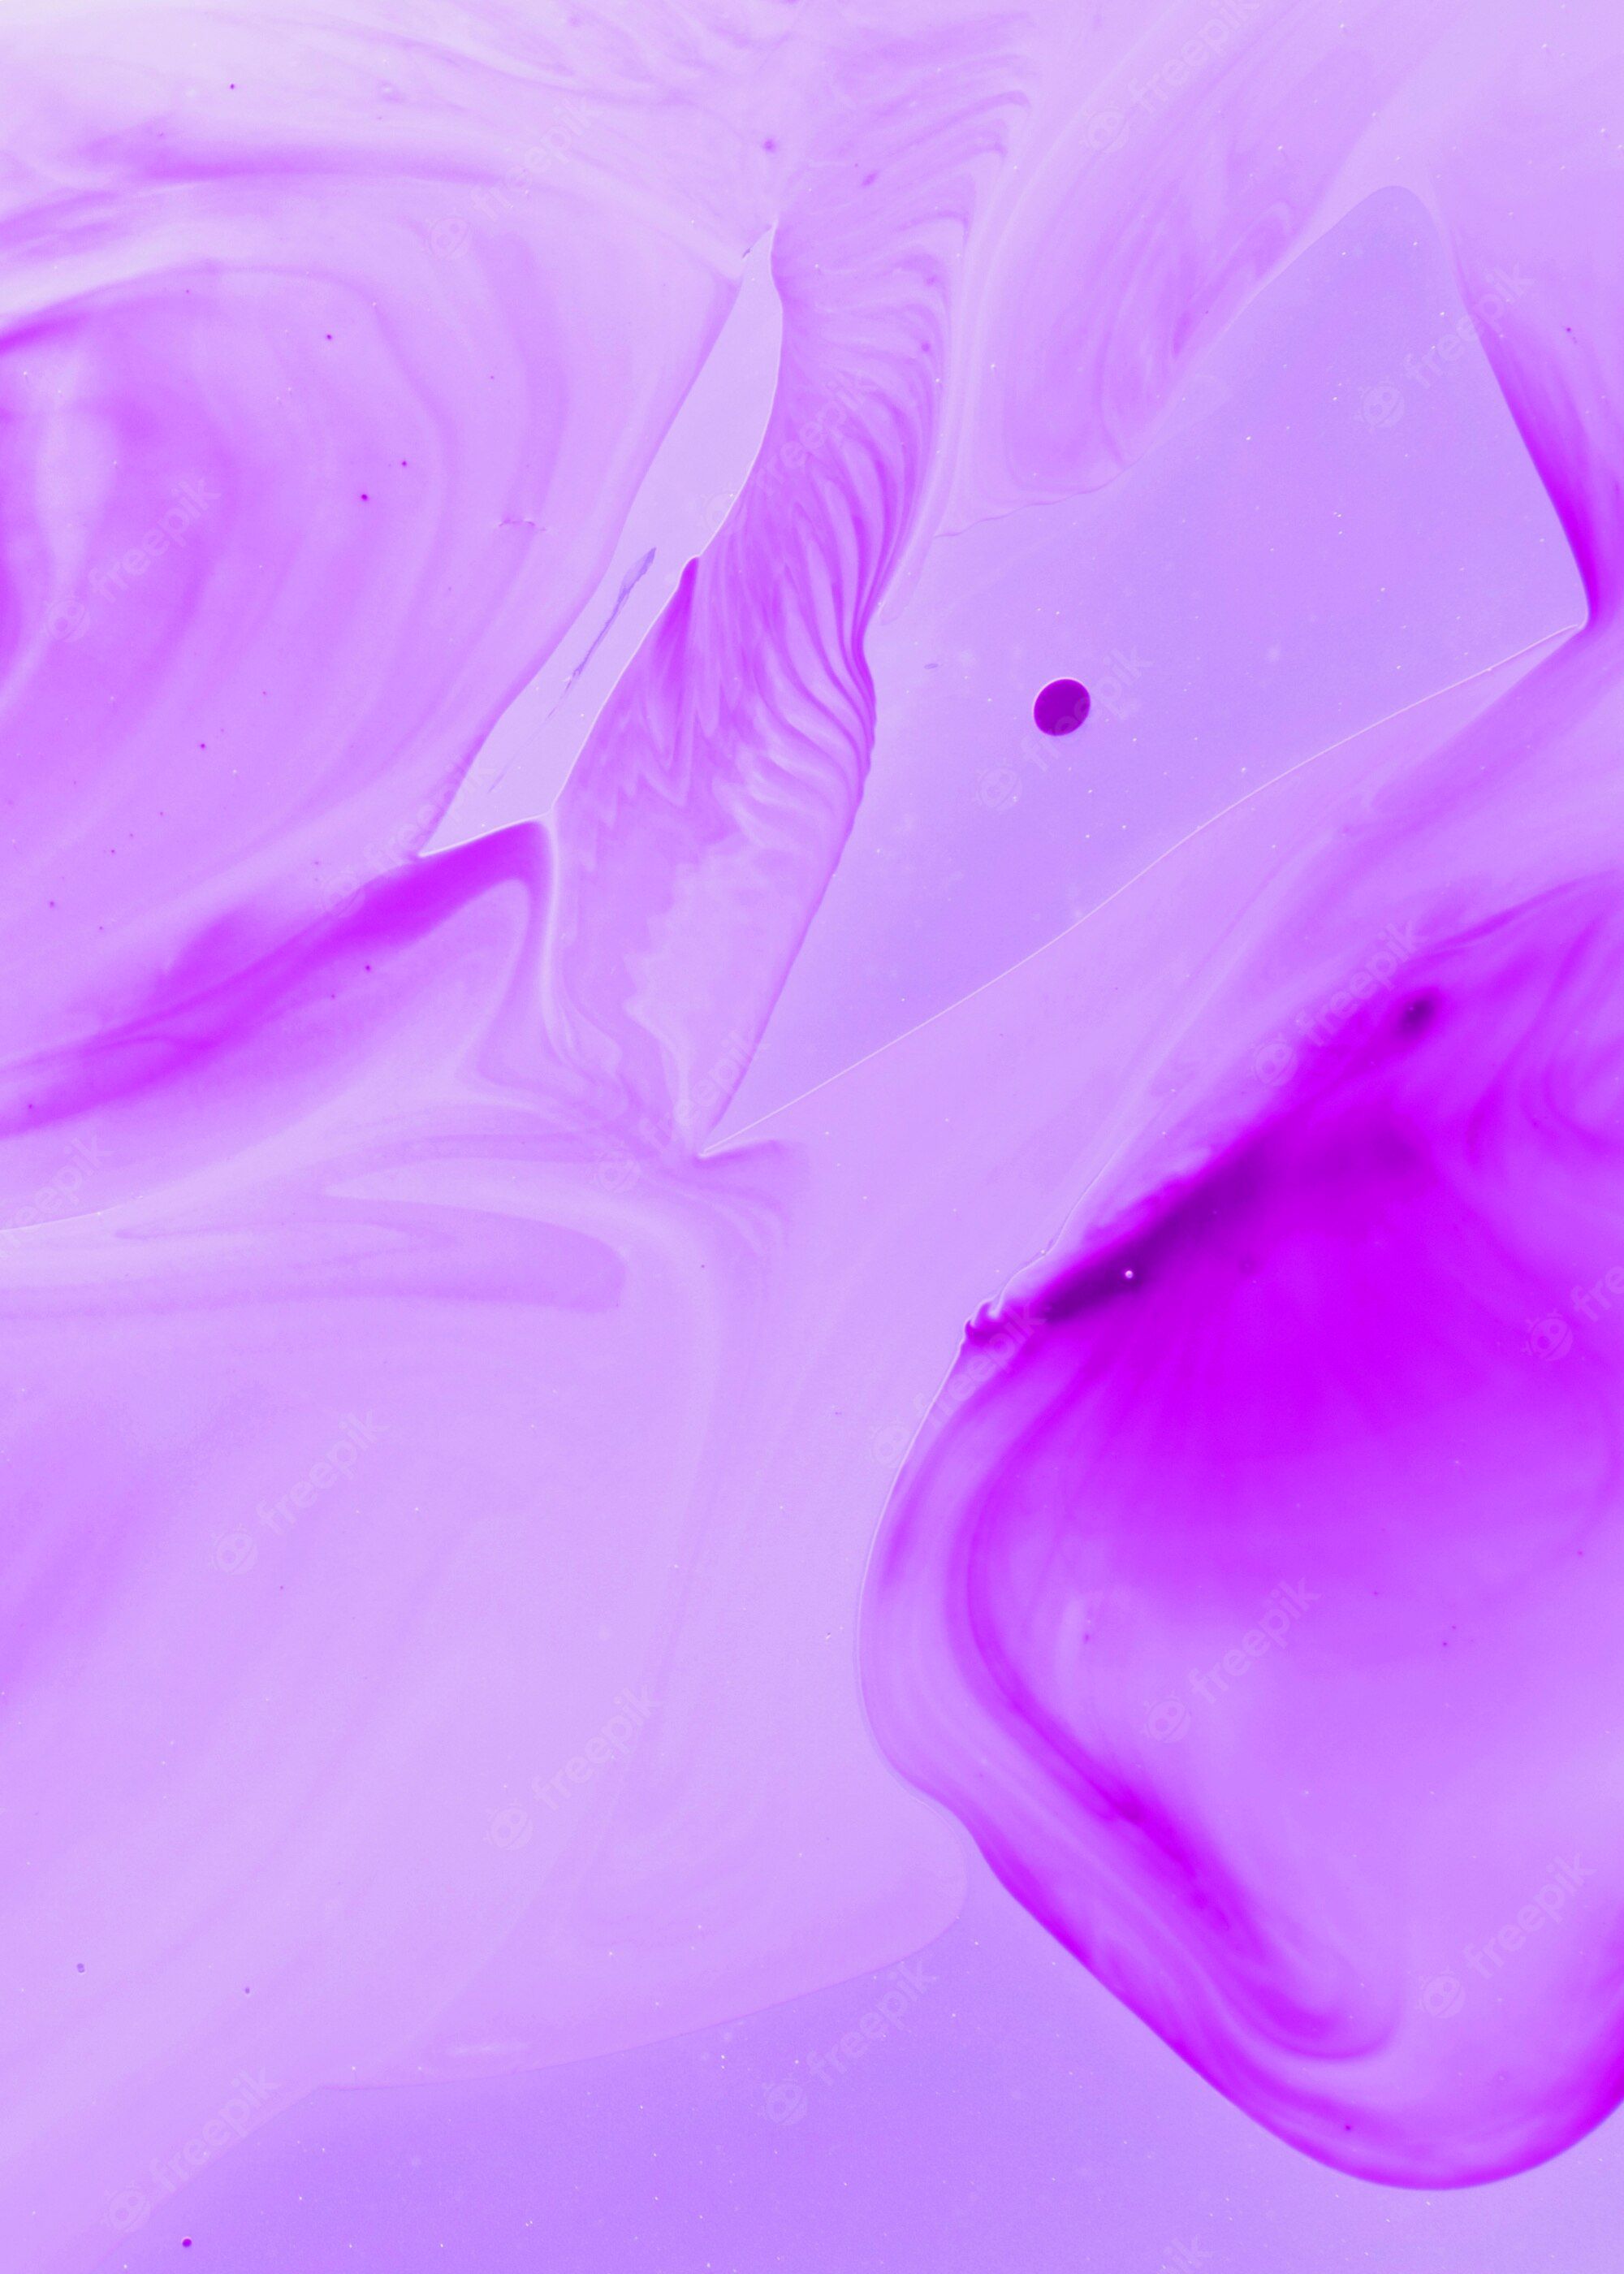 Purple Aesthetic Wallpaper Image